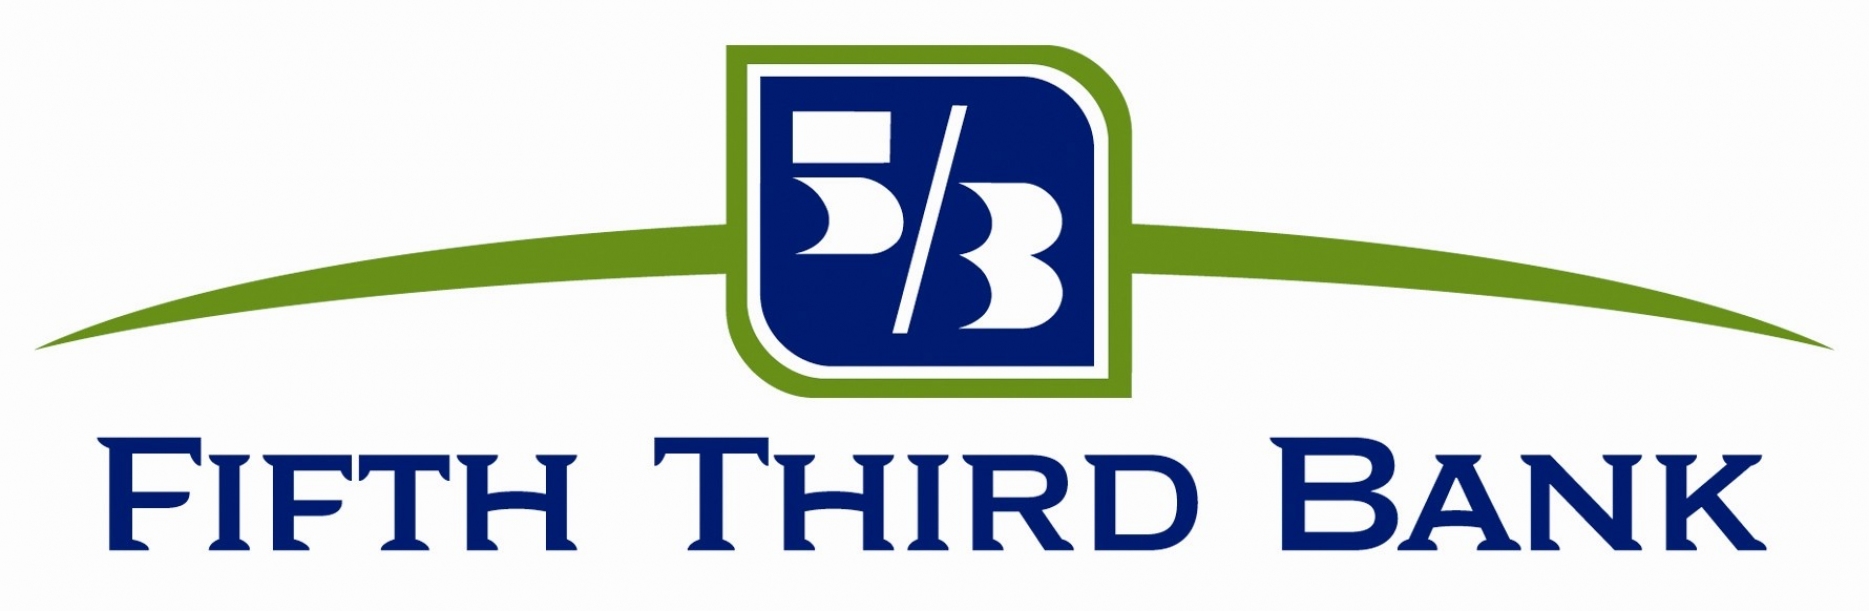 Fifth Third Bancorp Brand Logo